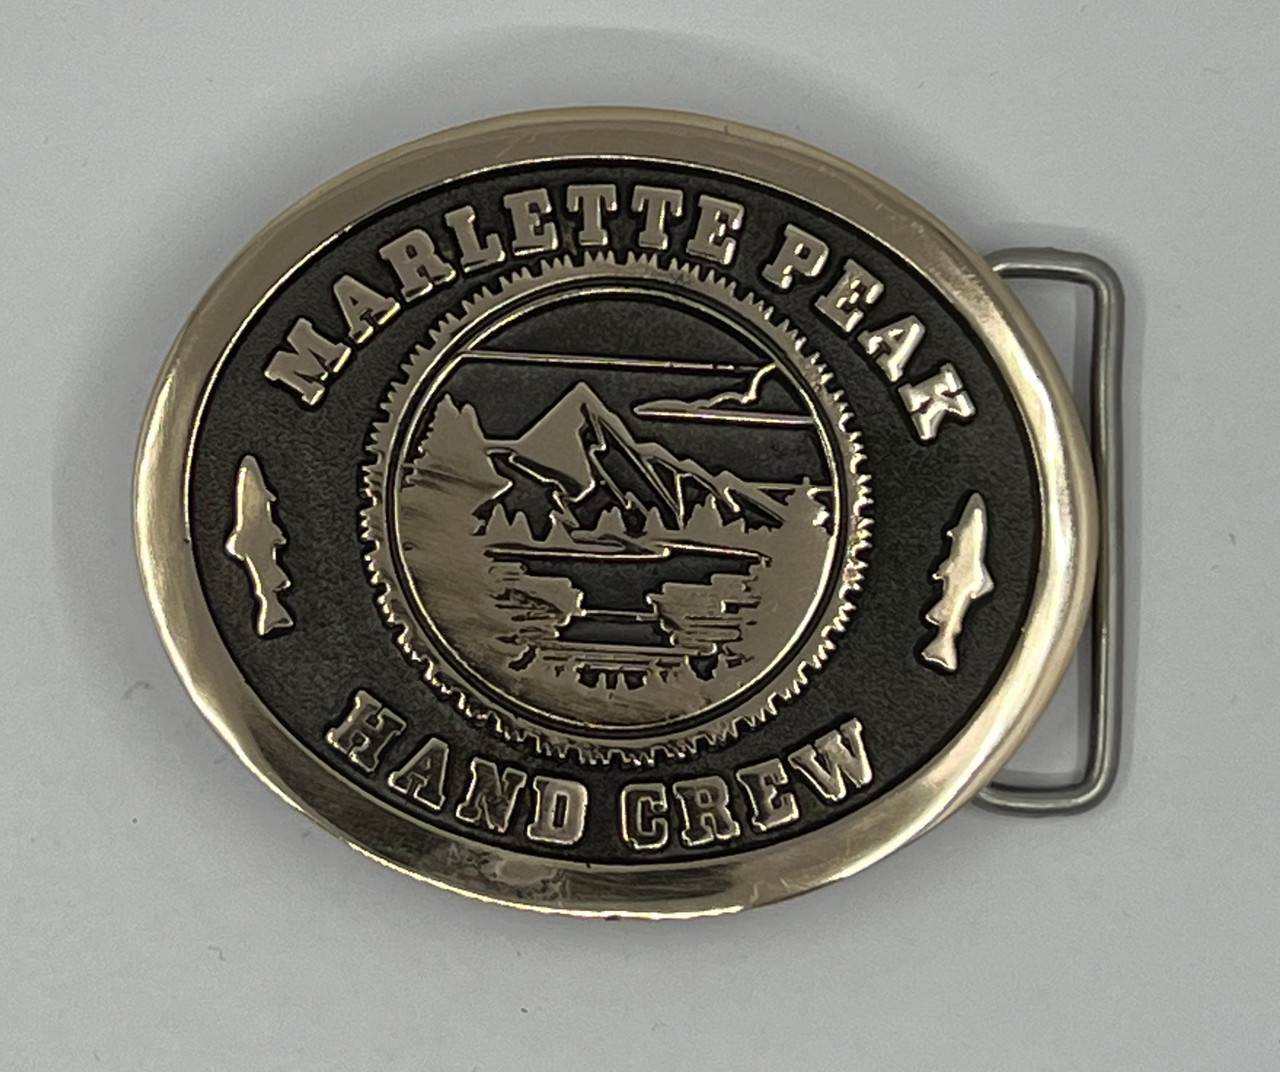 Marlette Peak Hand Crew Buckle (RESTRICTED) 